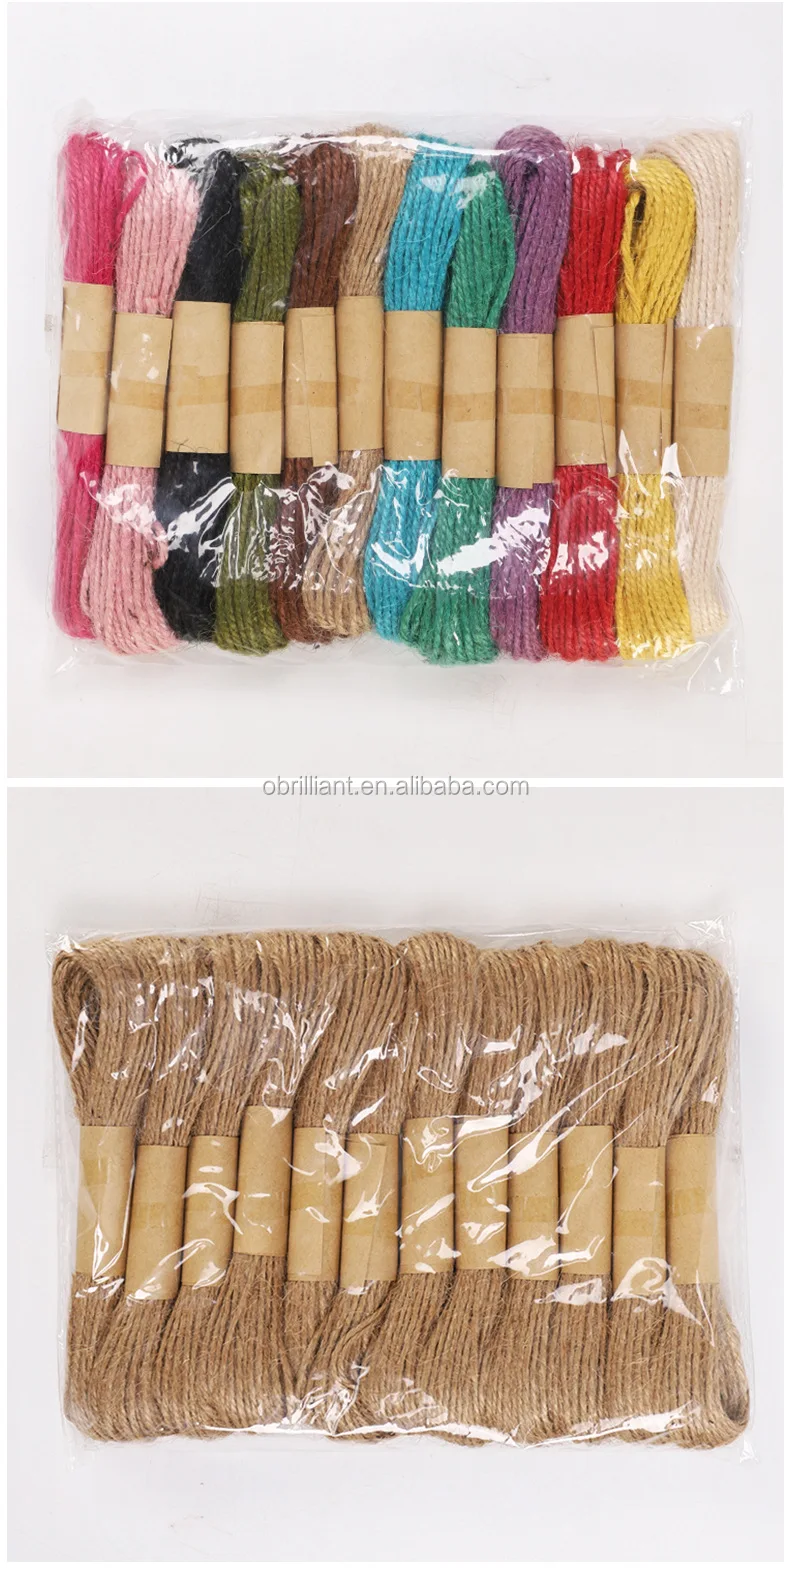 6mm Healifty Natural Jute Twine Rope Packing String for DIY Arts Crafts Gifts Packing Gardening Bundling 10m 